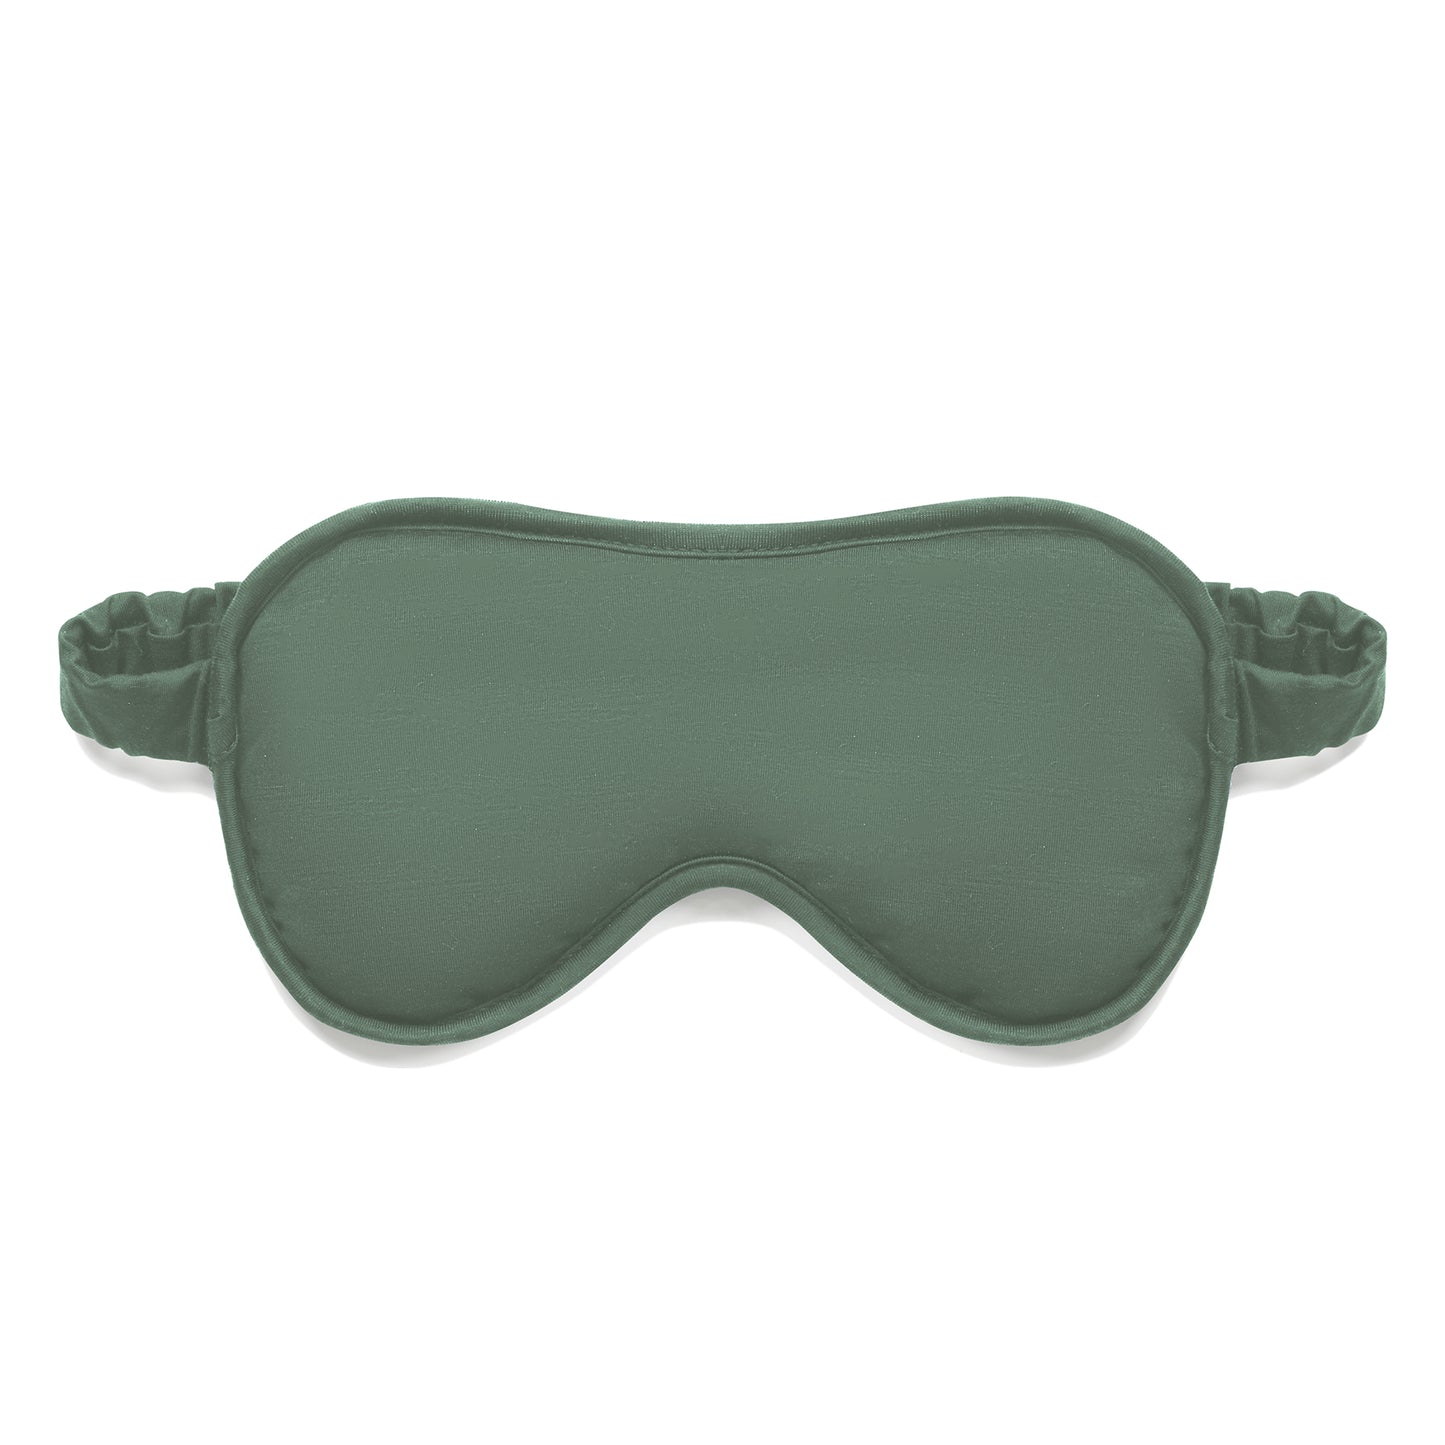 Balance sleep mask || Balsam green